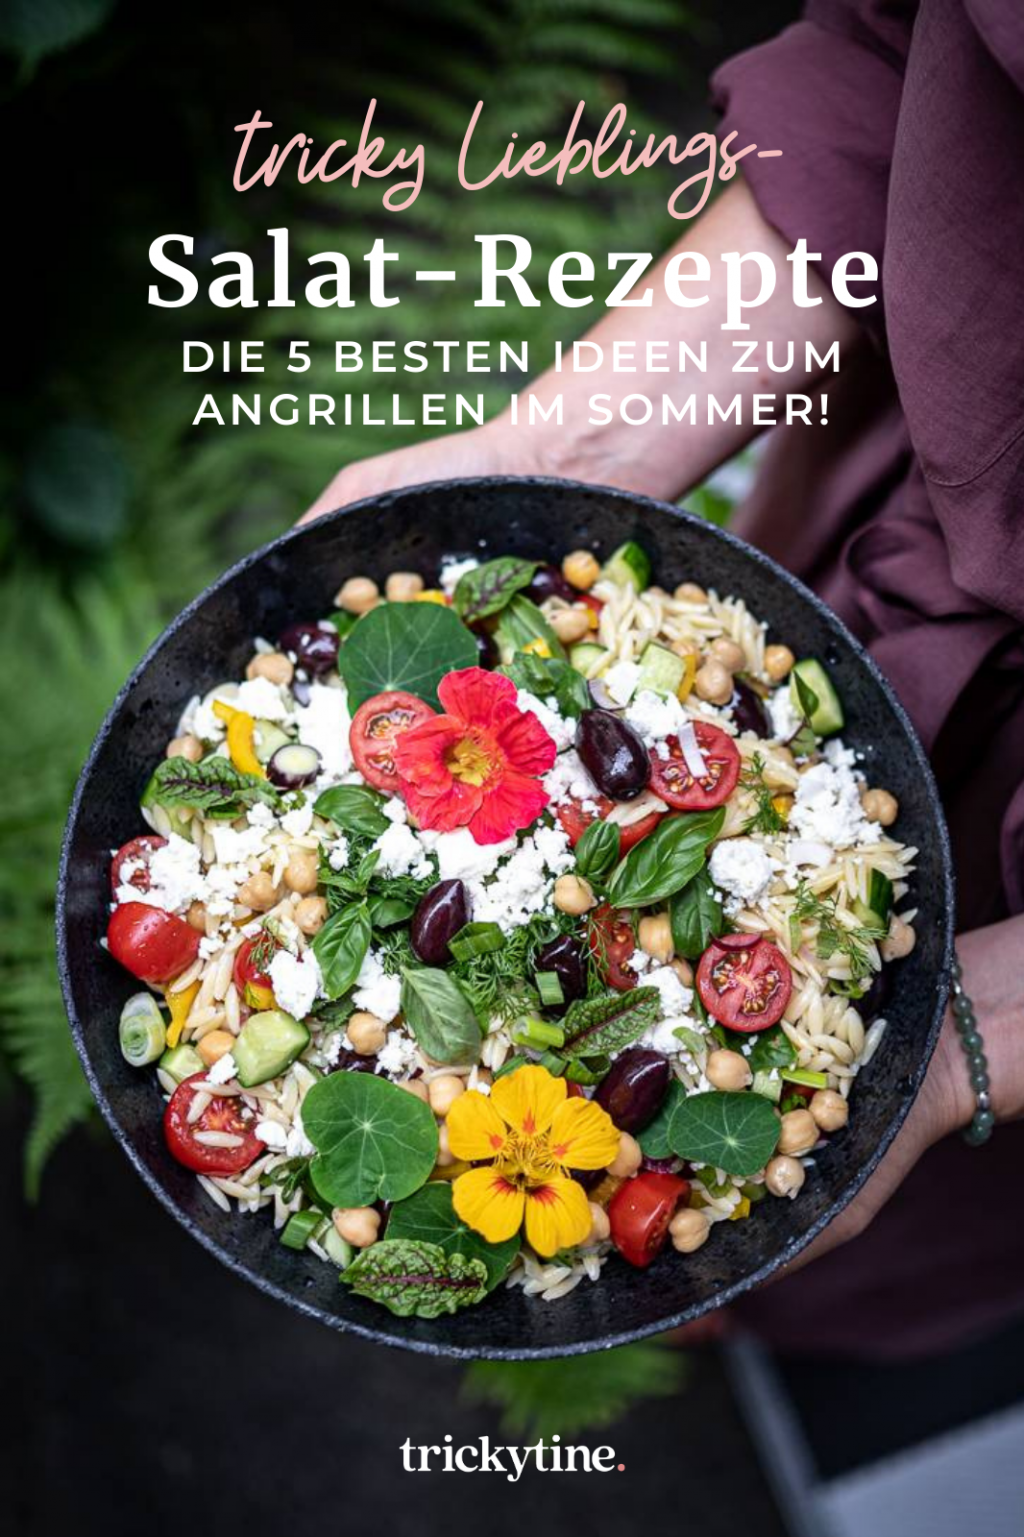 5 Salat-Rezepte, Orzo Nudelsalat